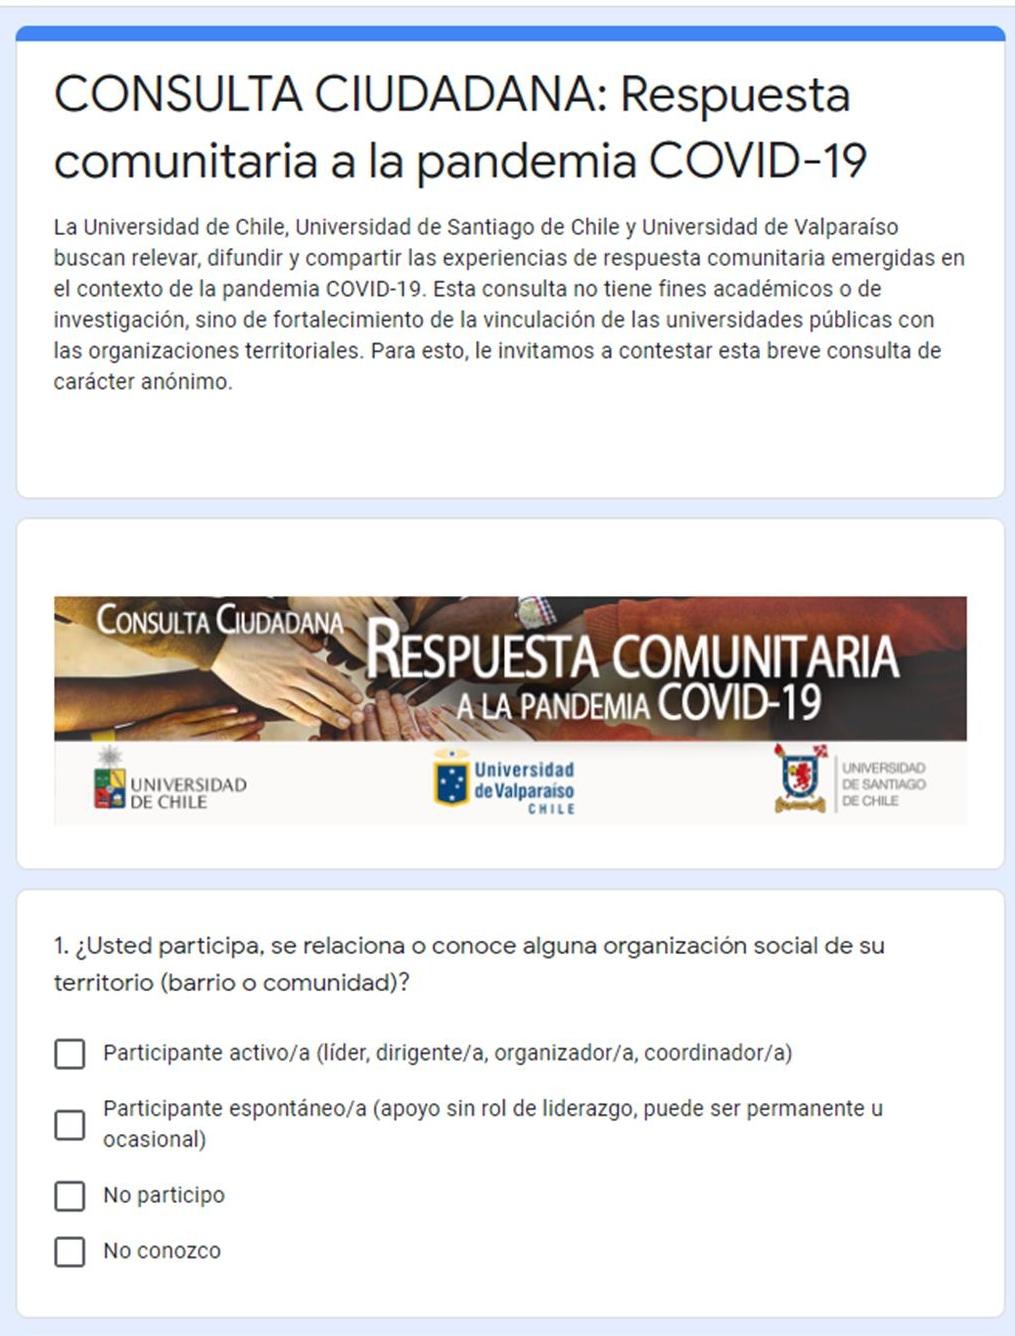 CONSULTA CIUDADANA: Respuesta comunitaria a la pandemia COVID-19